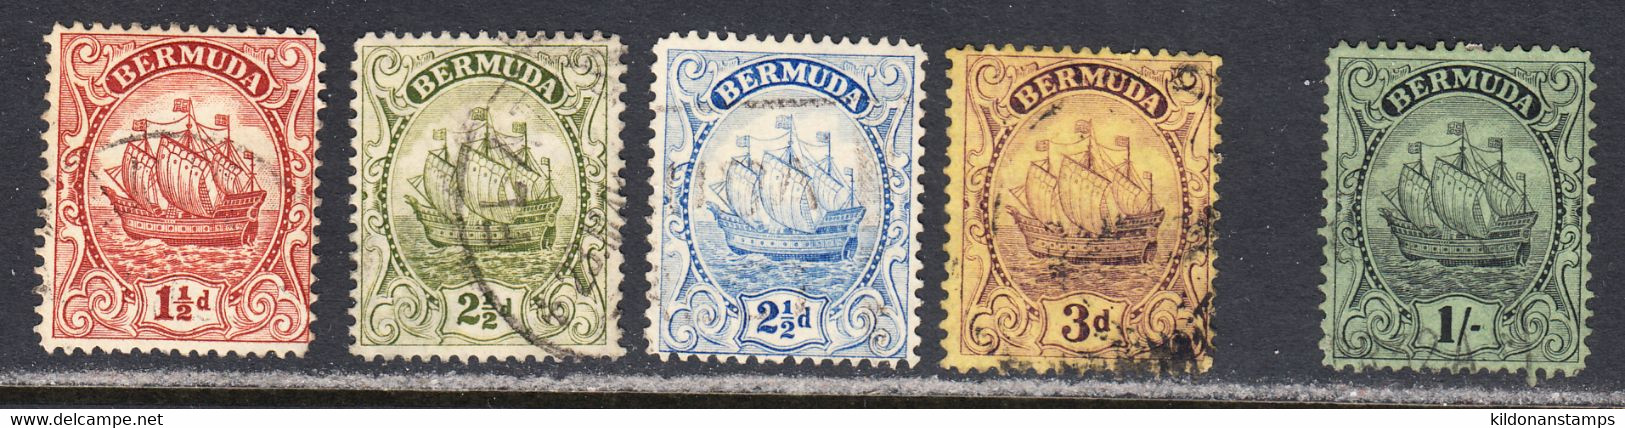 Bermuda 1922-34 Cancelled, Wmk Multi Script CA, See Notes, SG 79b,81,82,84,87 - Bermuda